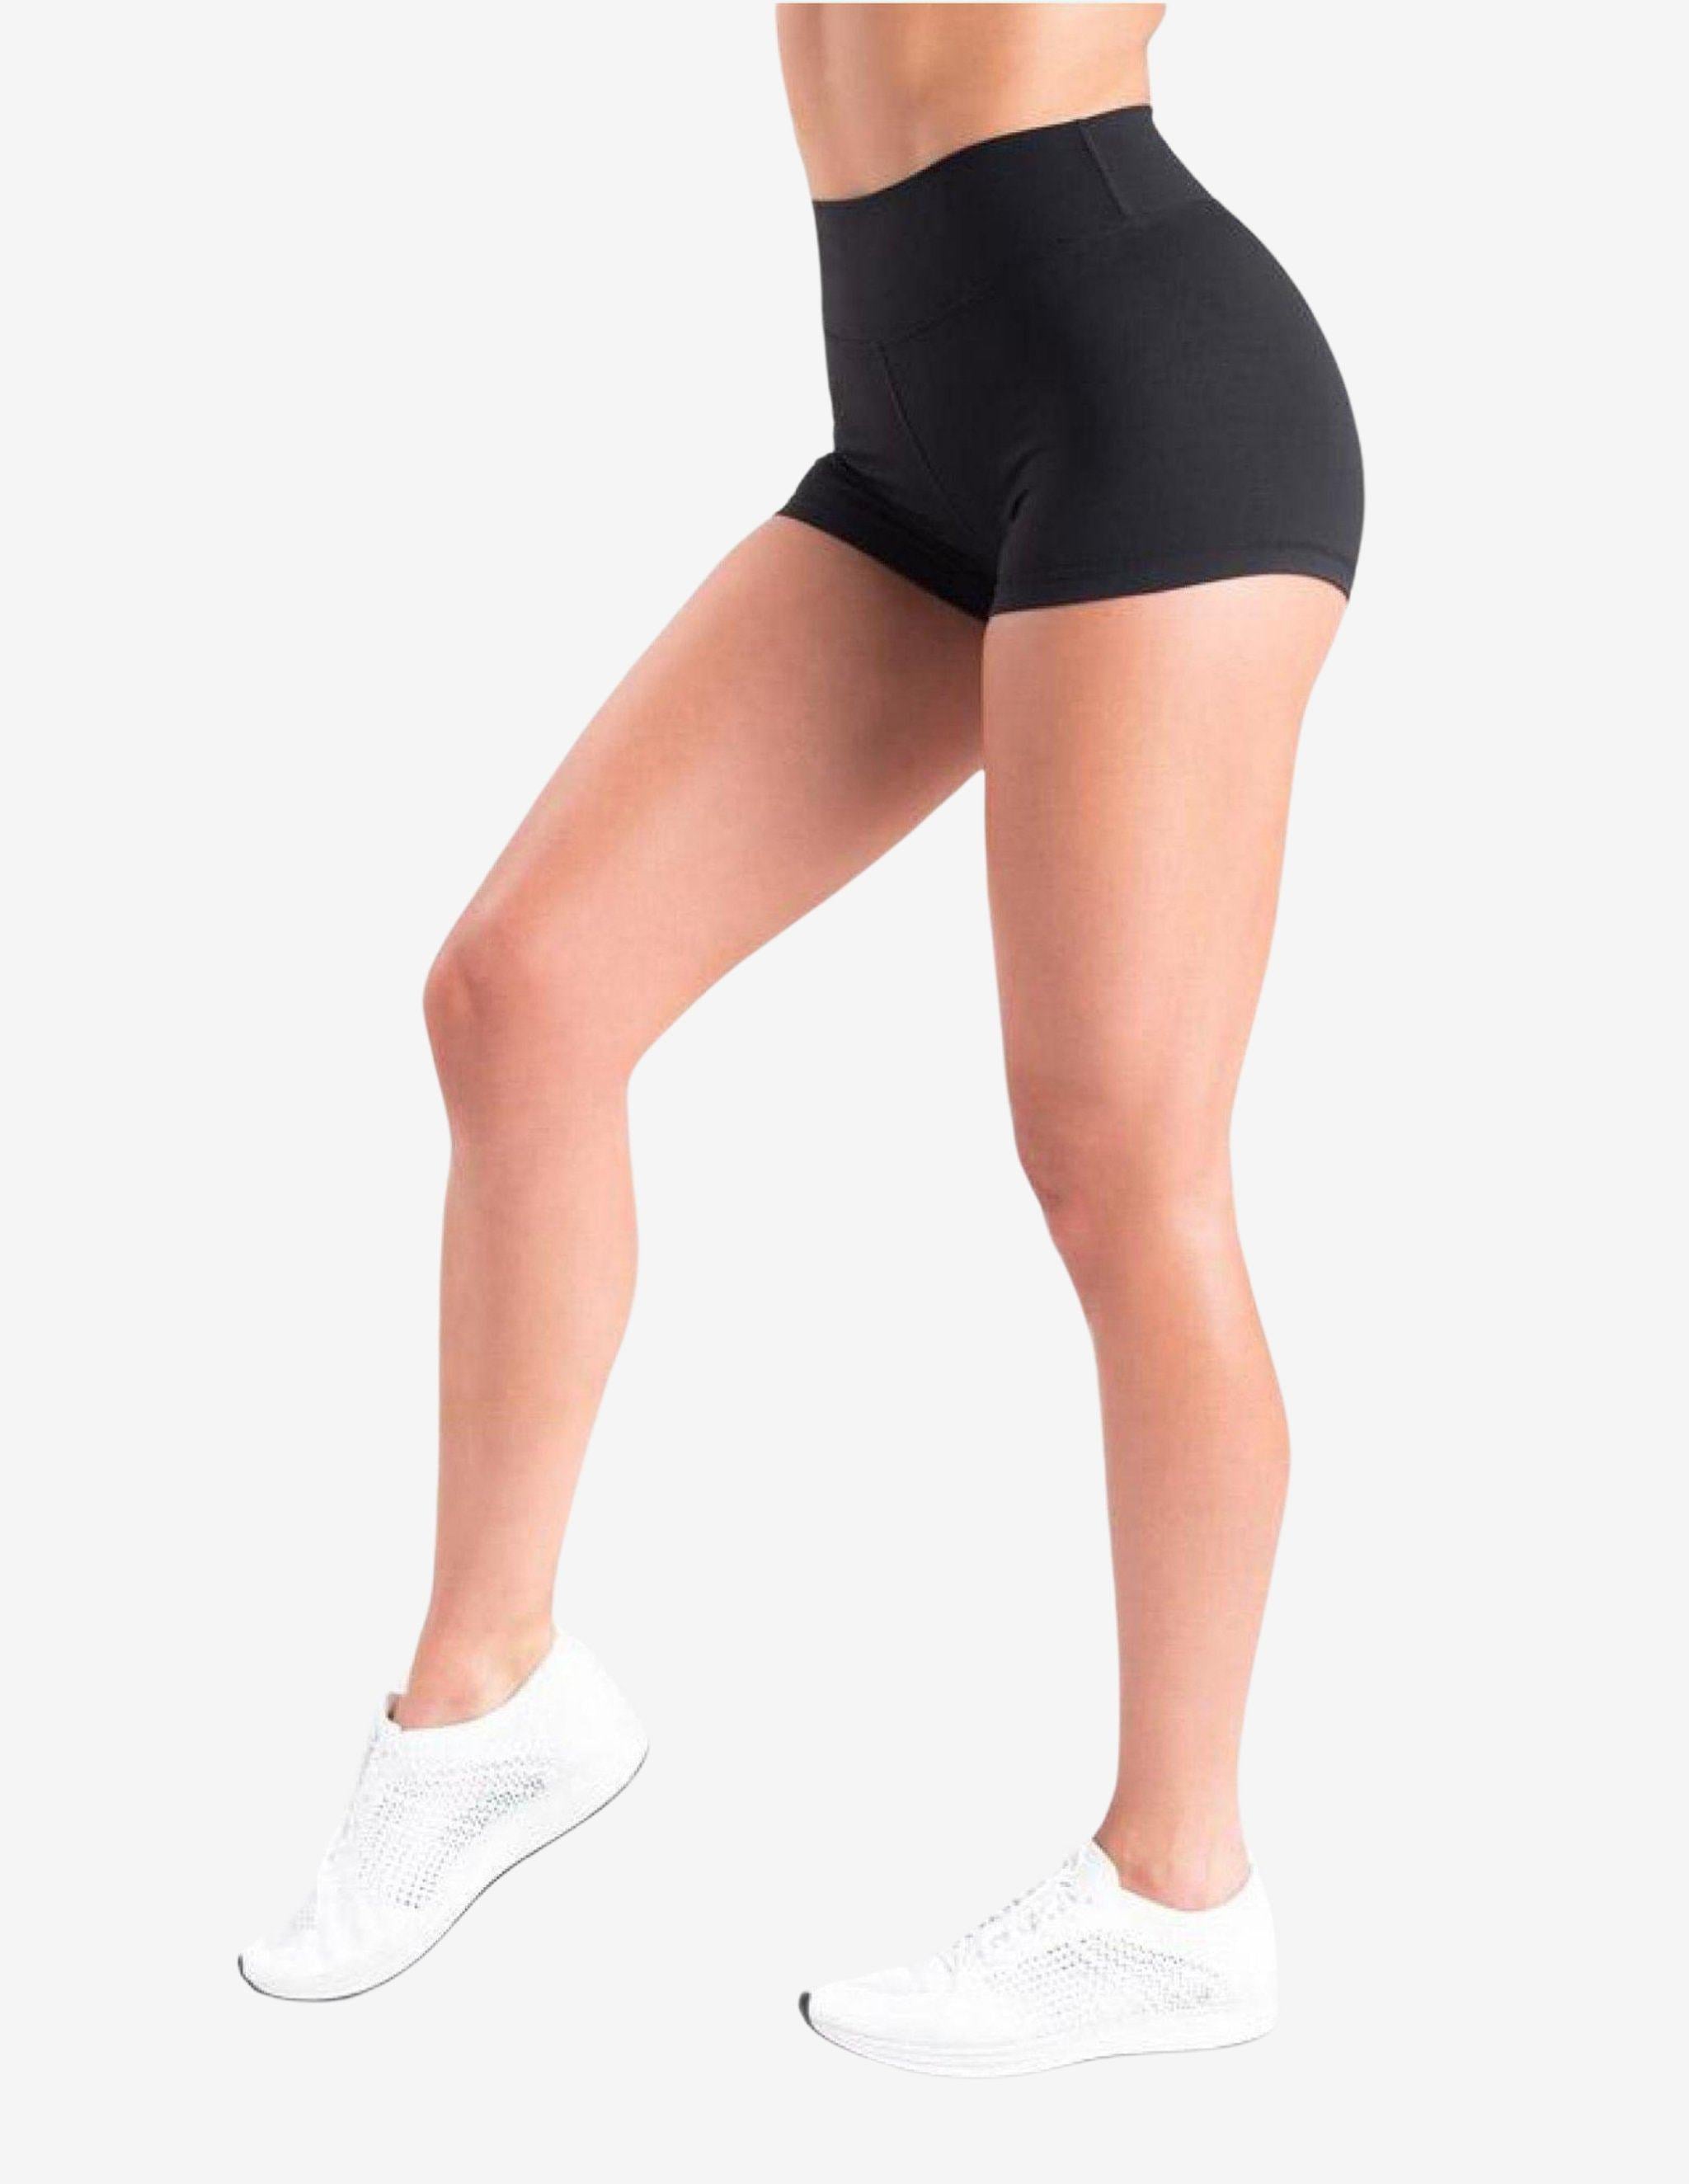 Arise Scrunch Short - Black – Tasgal Activewear